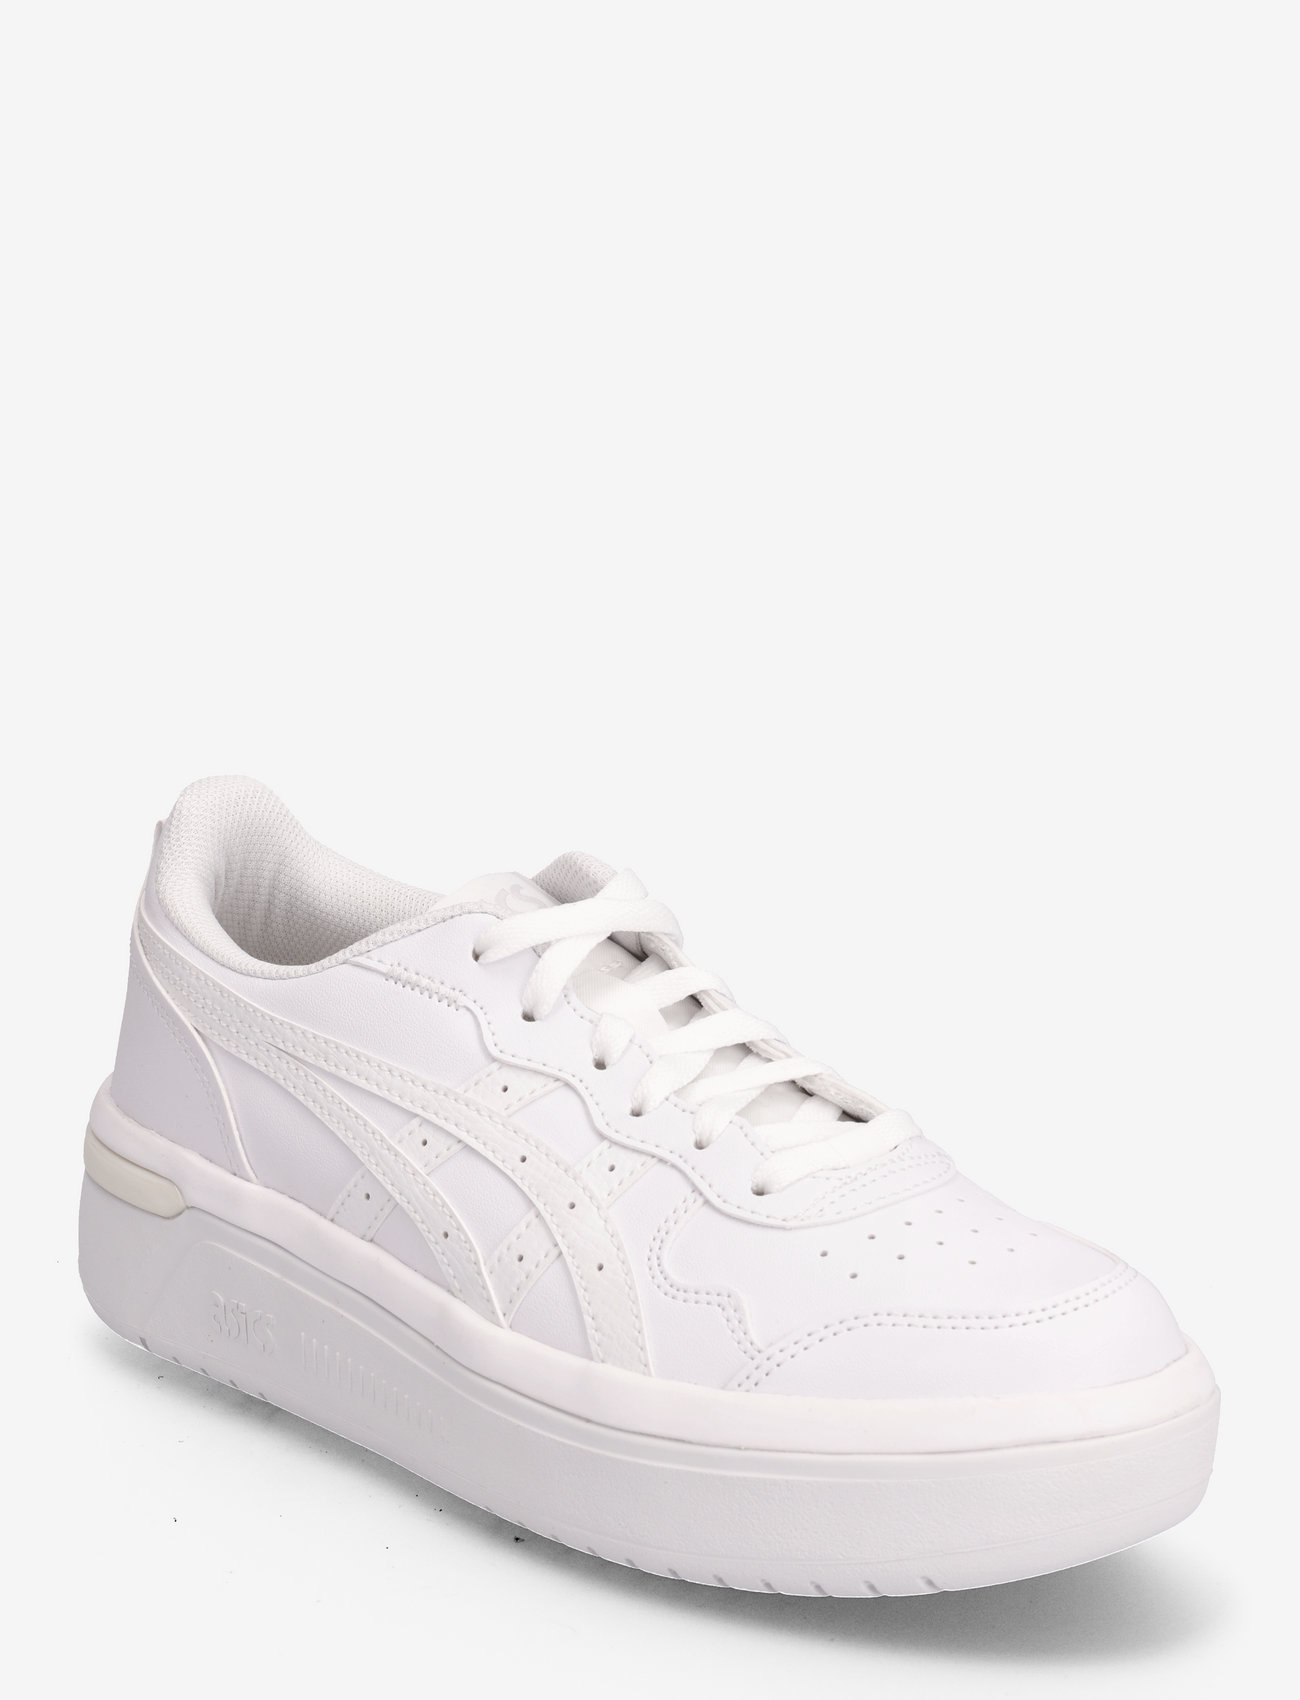 Asics - JAPAN S ST - låga sneakers - white/glacier grey - 0